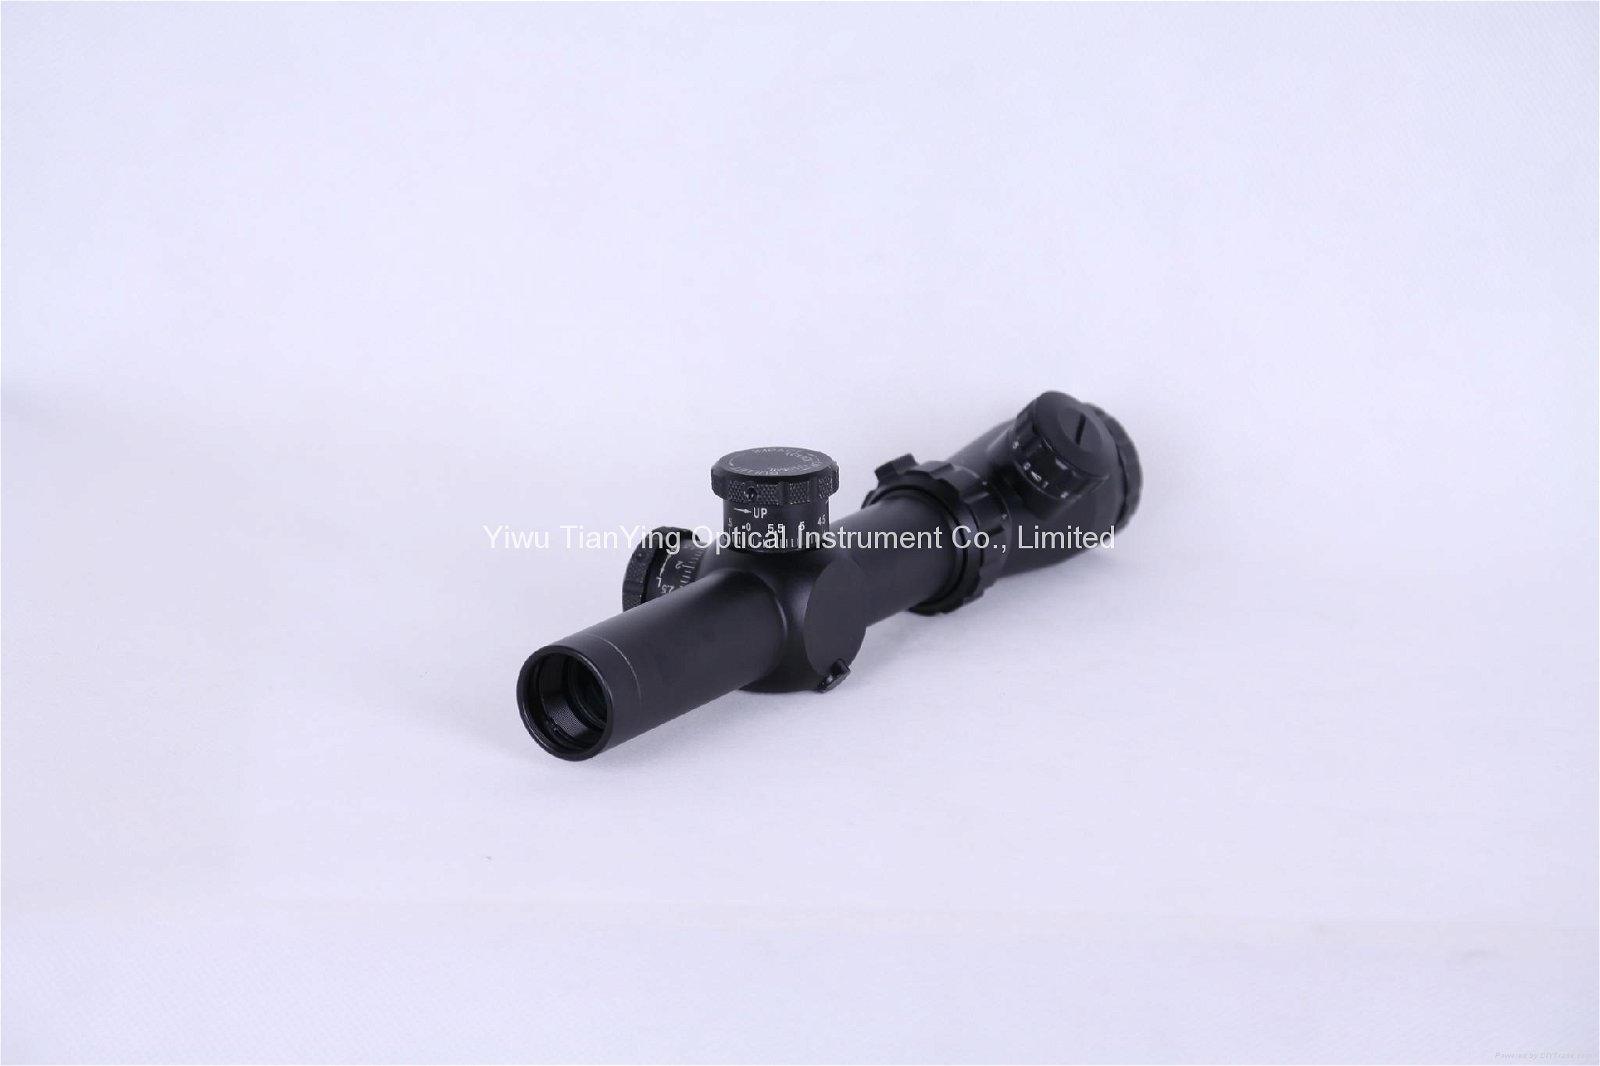 FT830 Fiber Optics Riflescope / Rifle Scope .223 Ballistic Reticle - M4/M16/AR15 -4